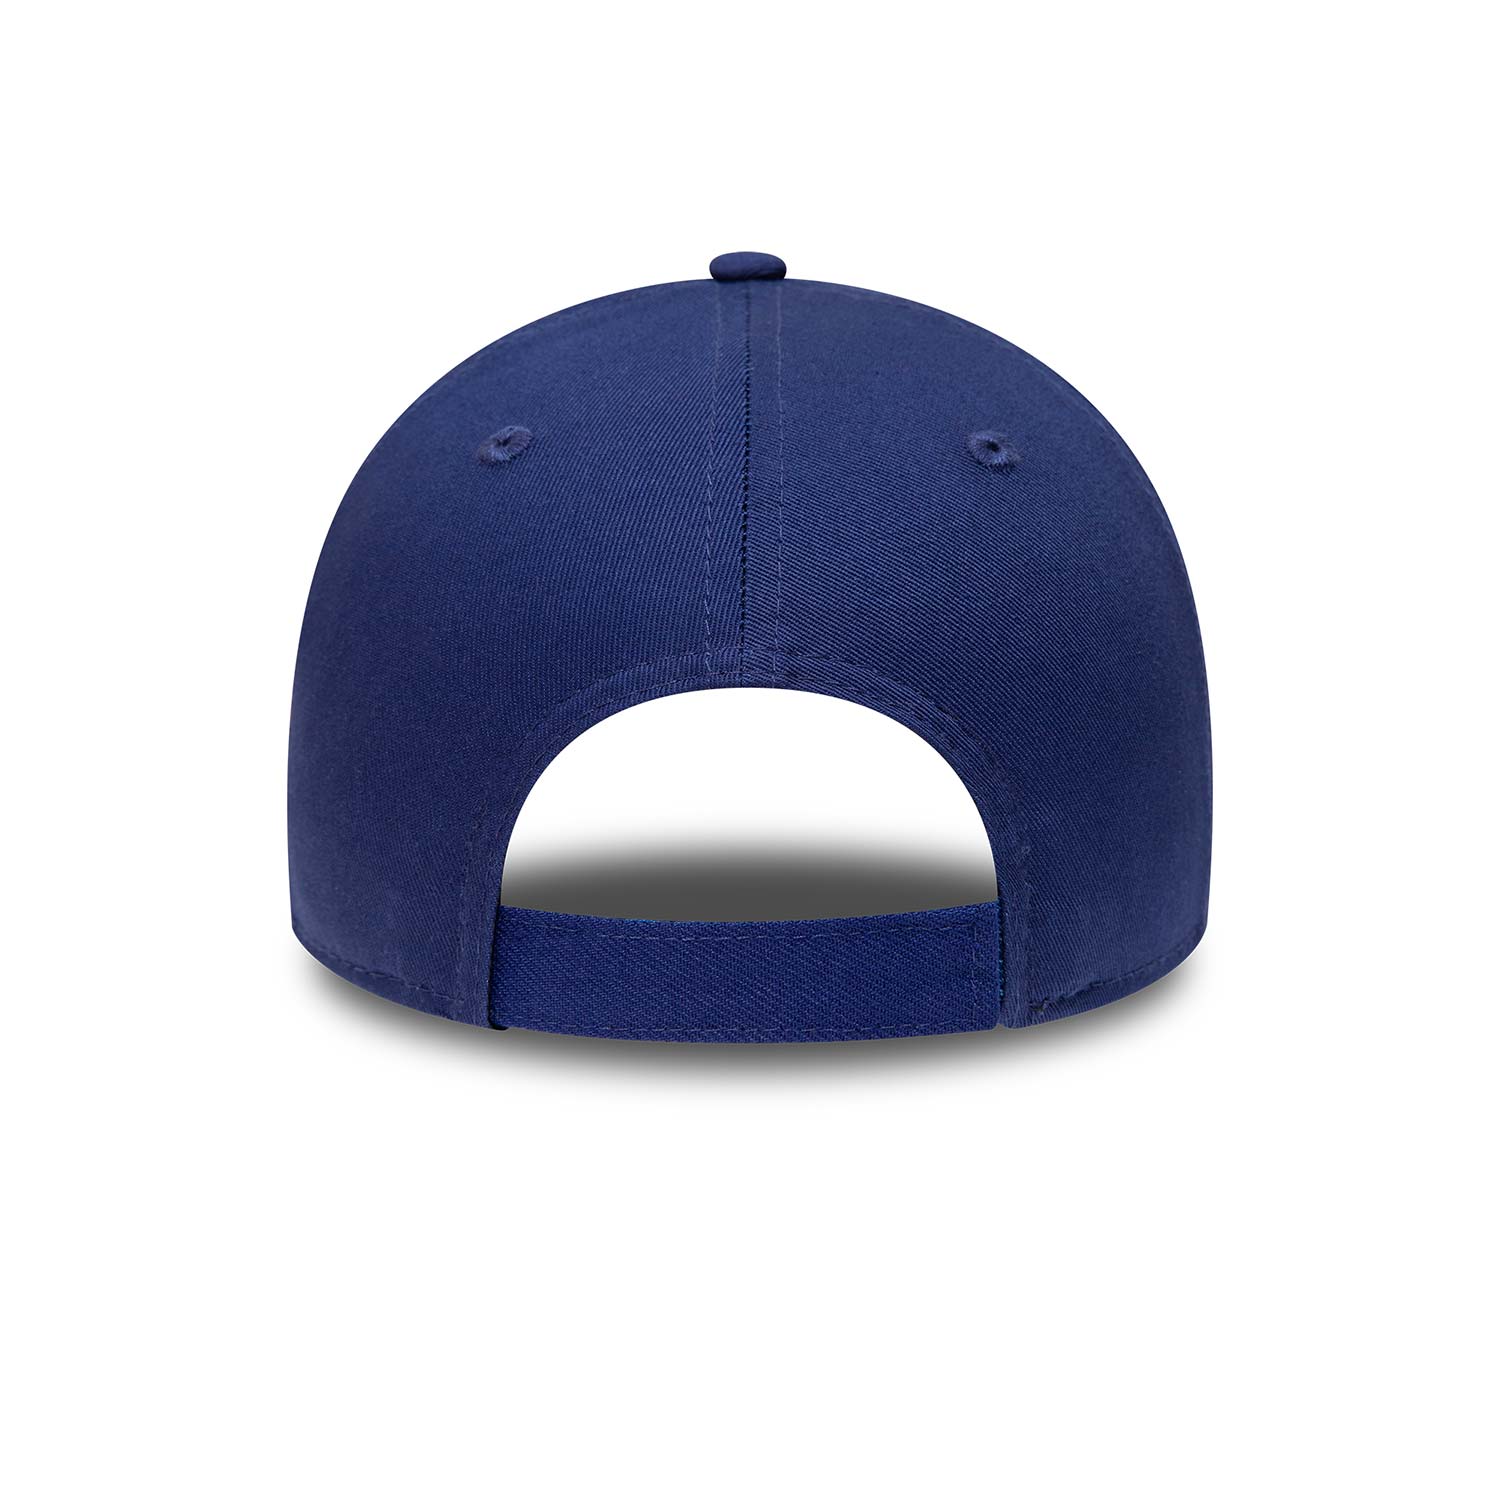 LA Dodgers Heart Pack Blue 9FORTY Adjustable Cap